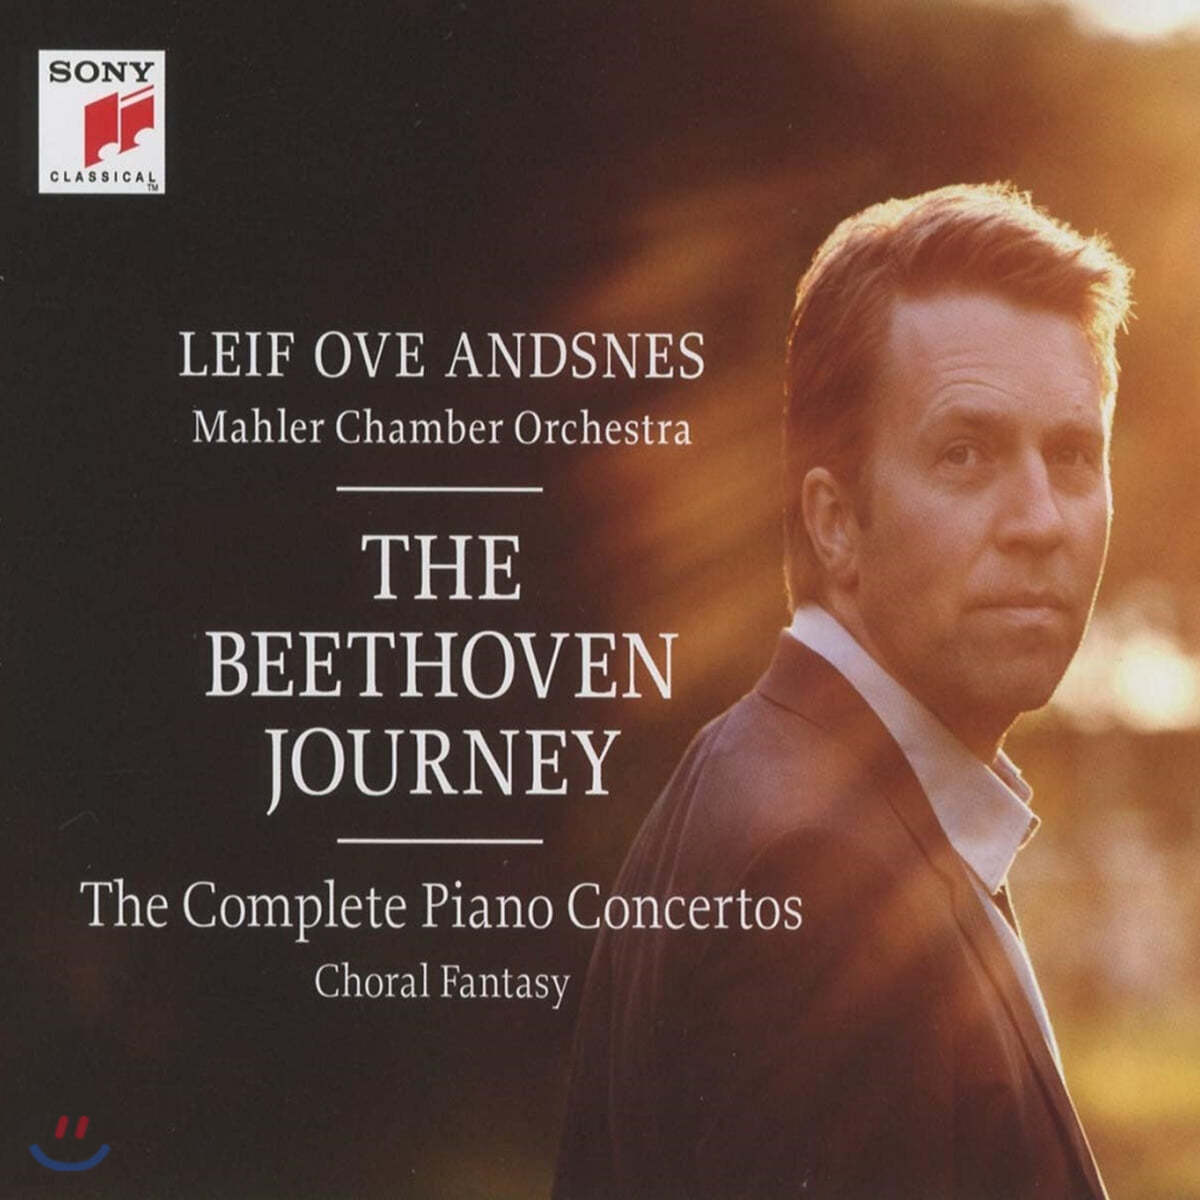 Leif Ove Andsnes 베토벤: 피아노 협주곡 전집 (The Beethoven Journey - Piano Concertos Nos.1-5)